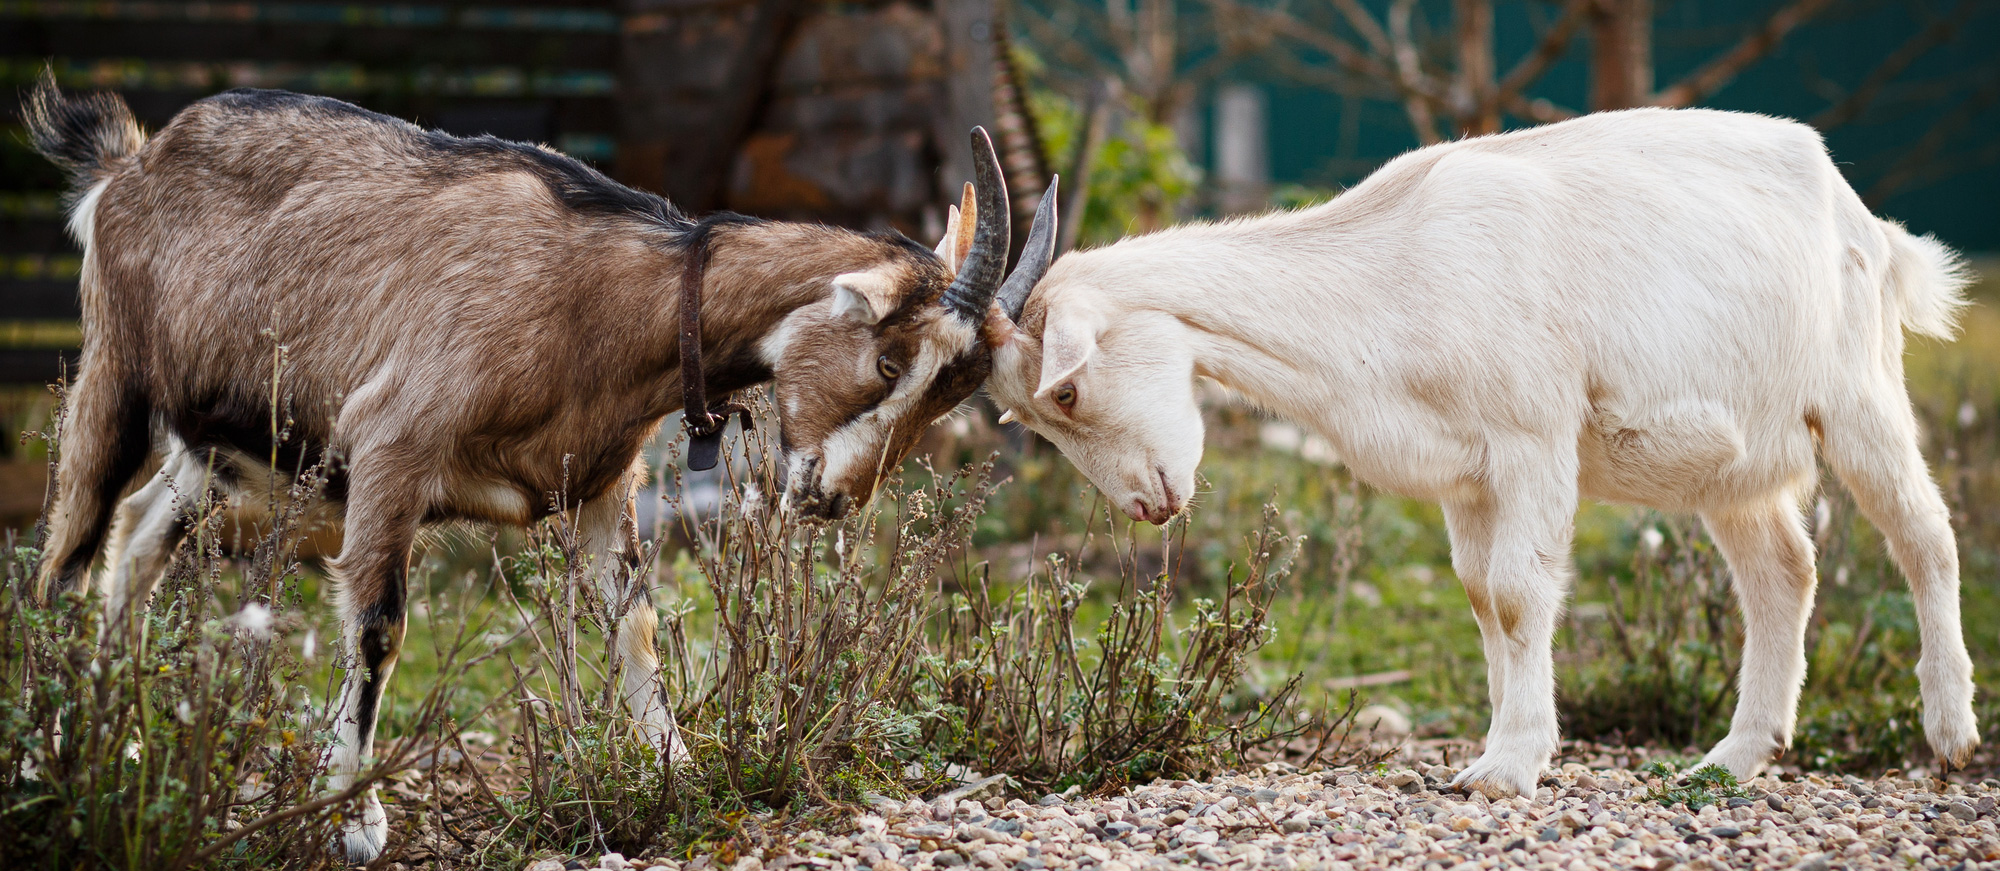 2 goats locking horns over civil ligitation dispute